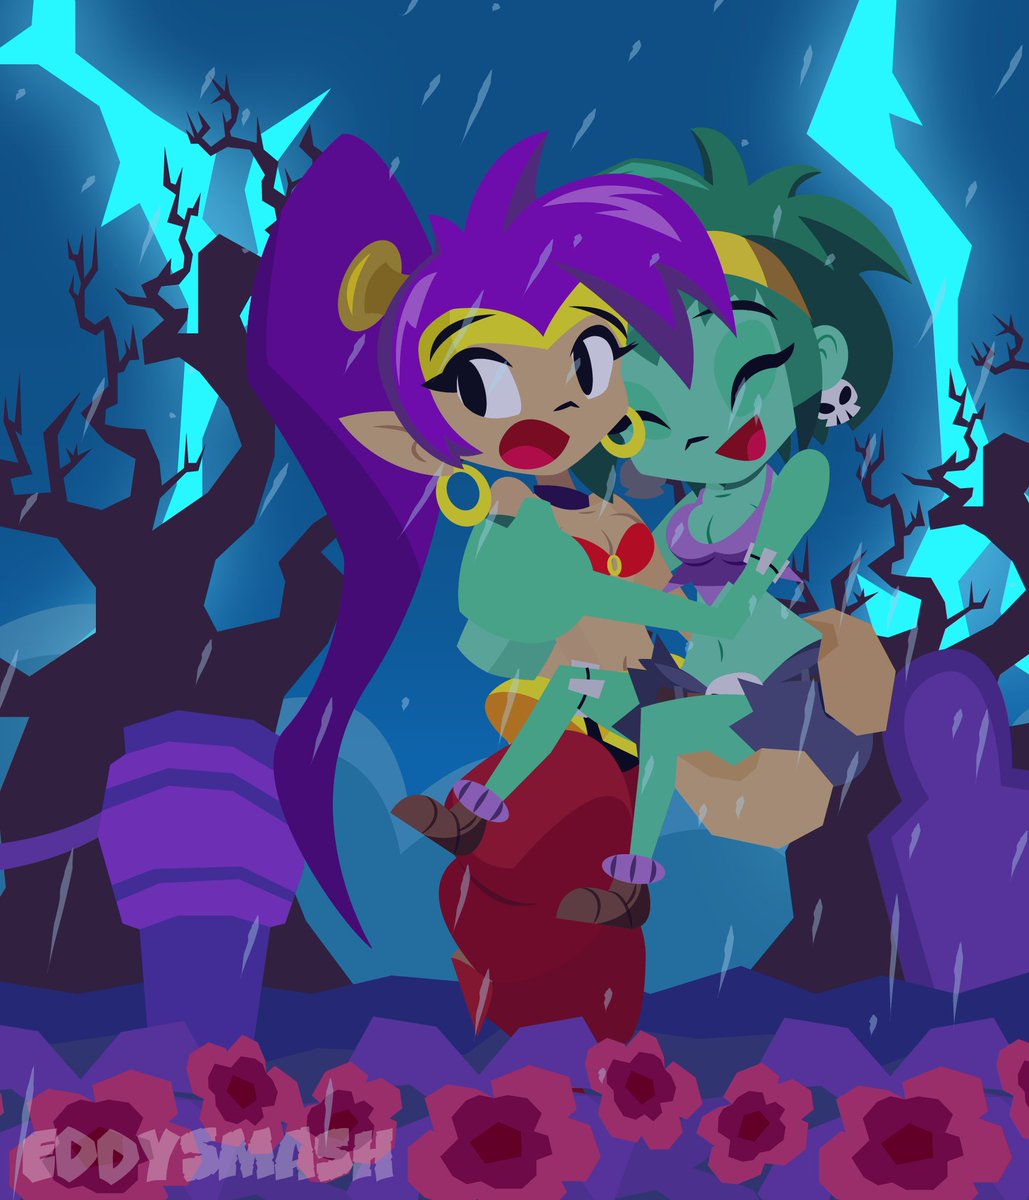 Run Run Rottytops!!! 💥💃🧟‍♀️
(Shantae and the Pirate's Curse) [Redraw]

#Shantae #Rottytops #ShantaePiratesCurse #Shantaefanart